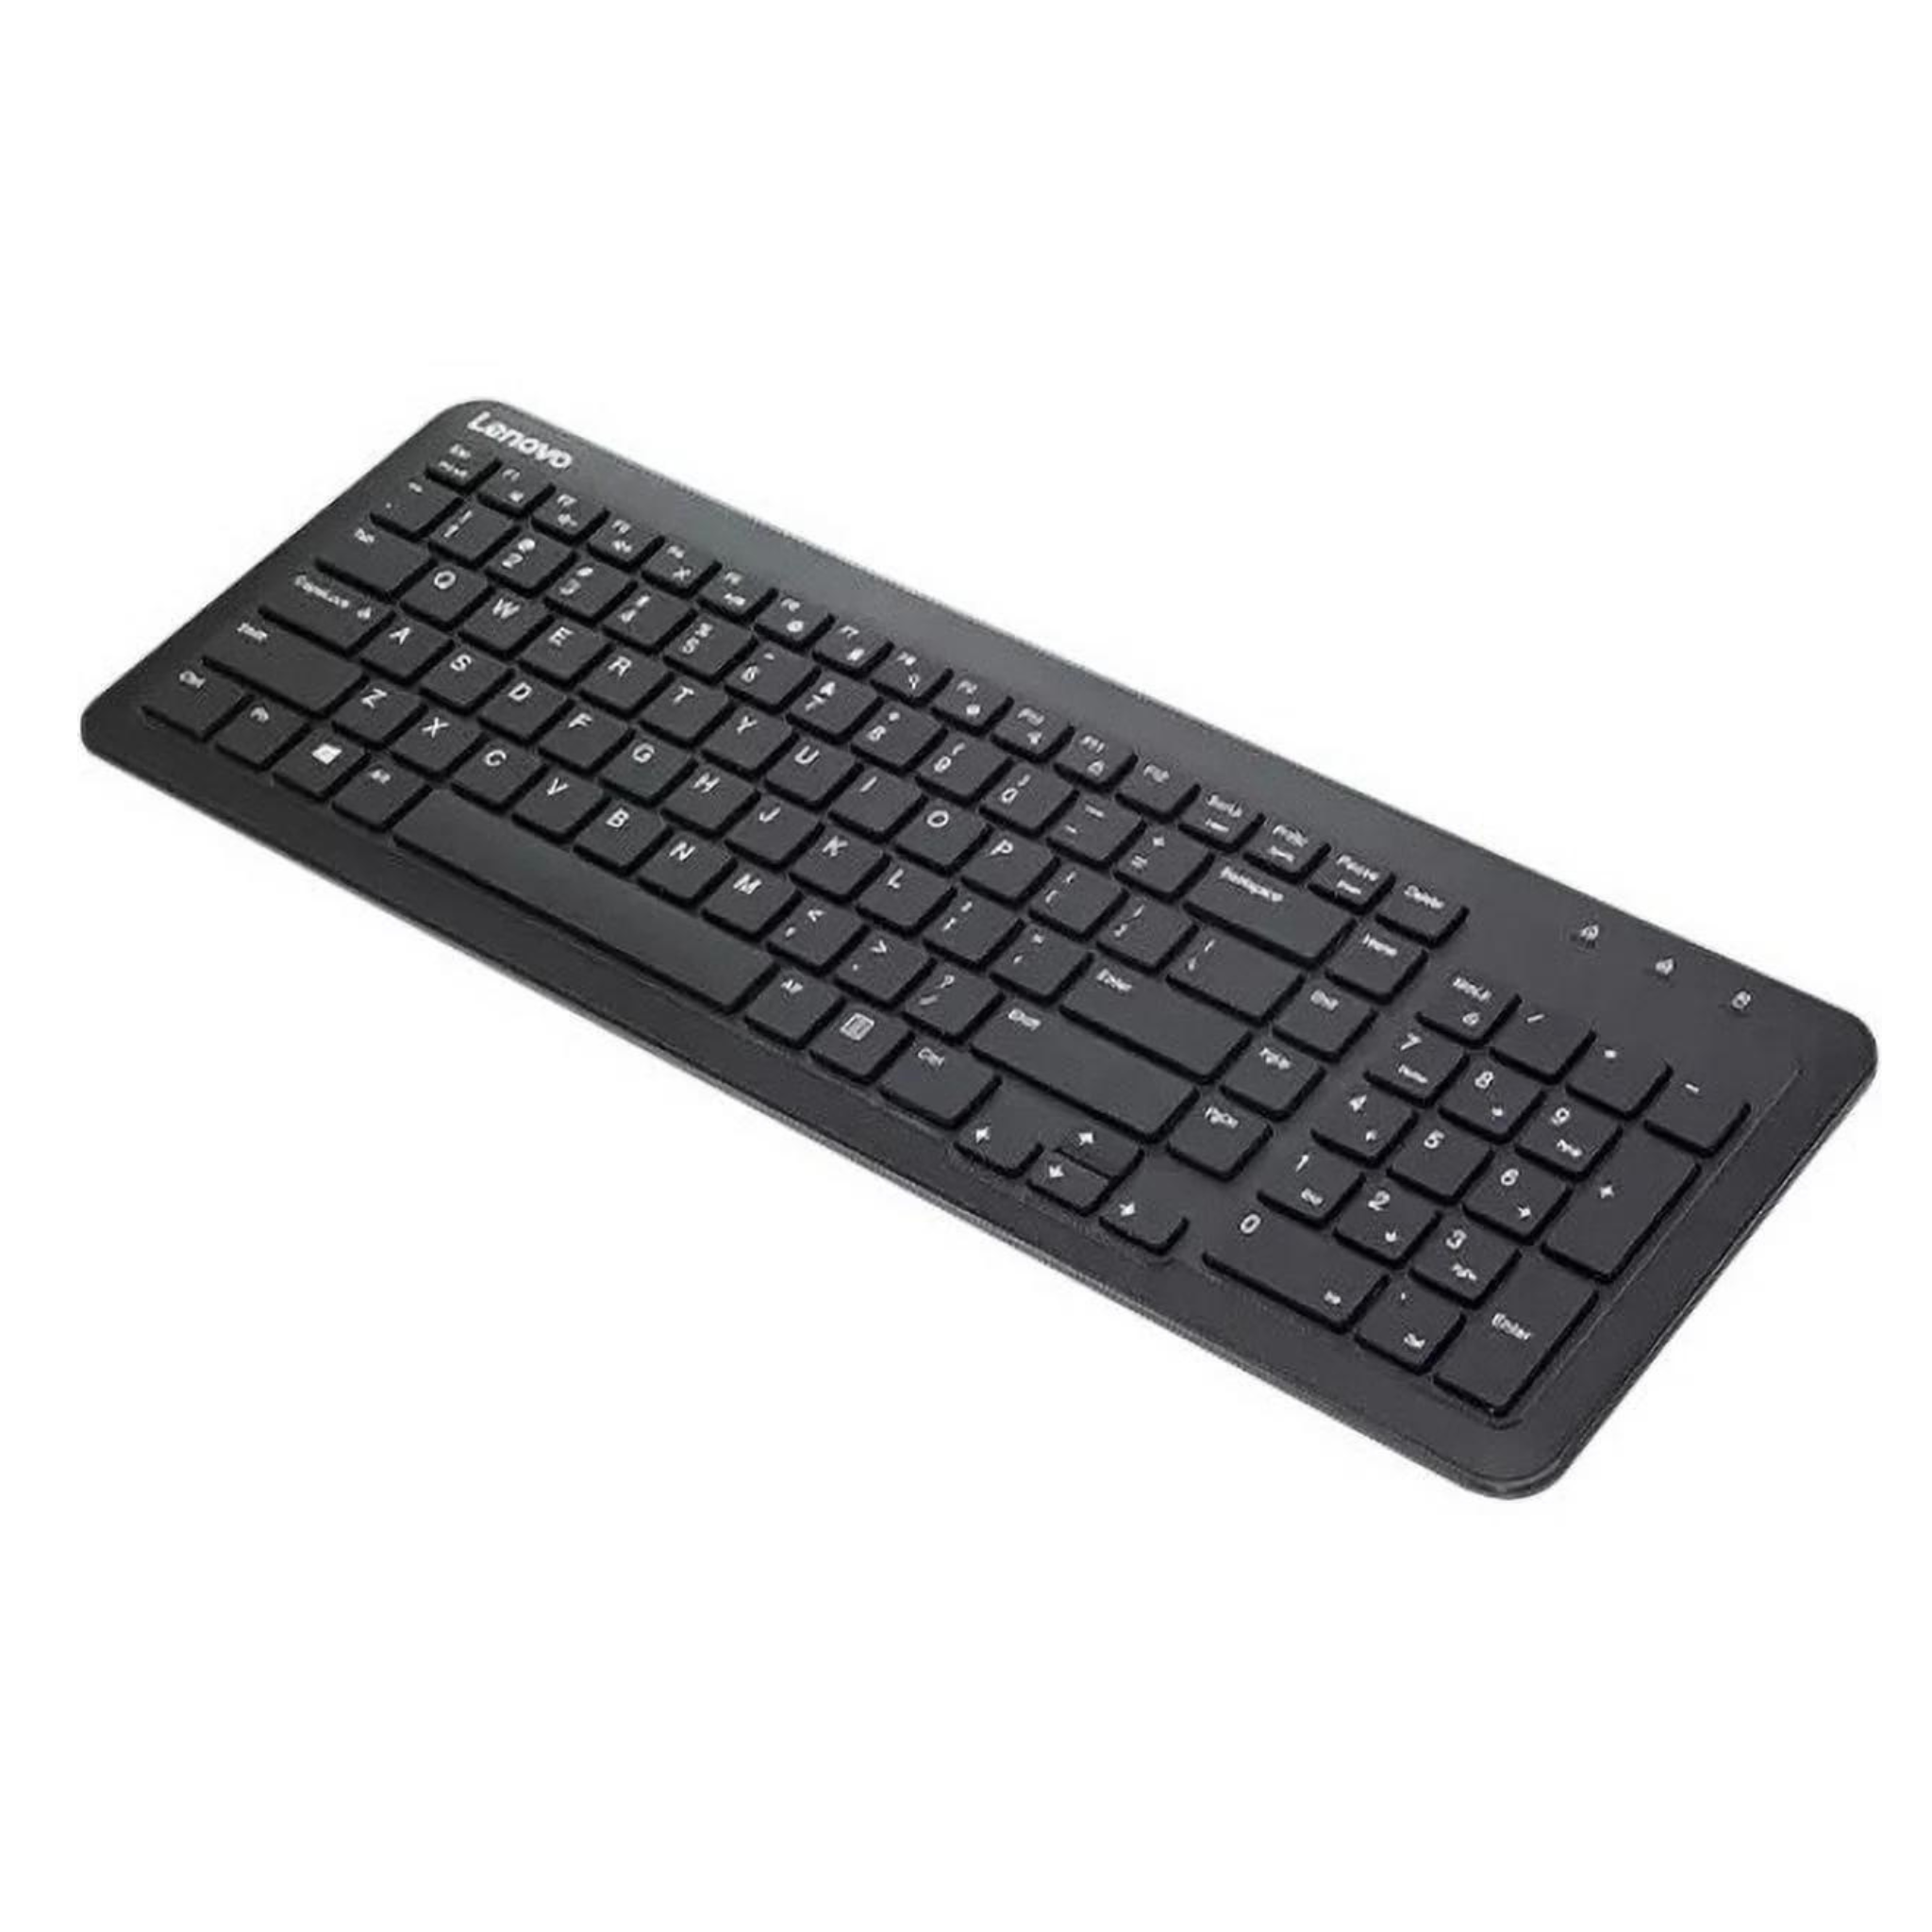 Lenovo 300 Wireless Keyboard